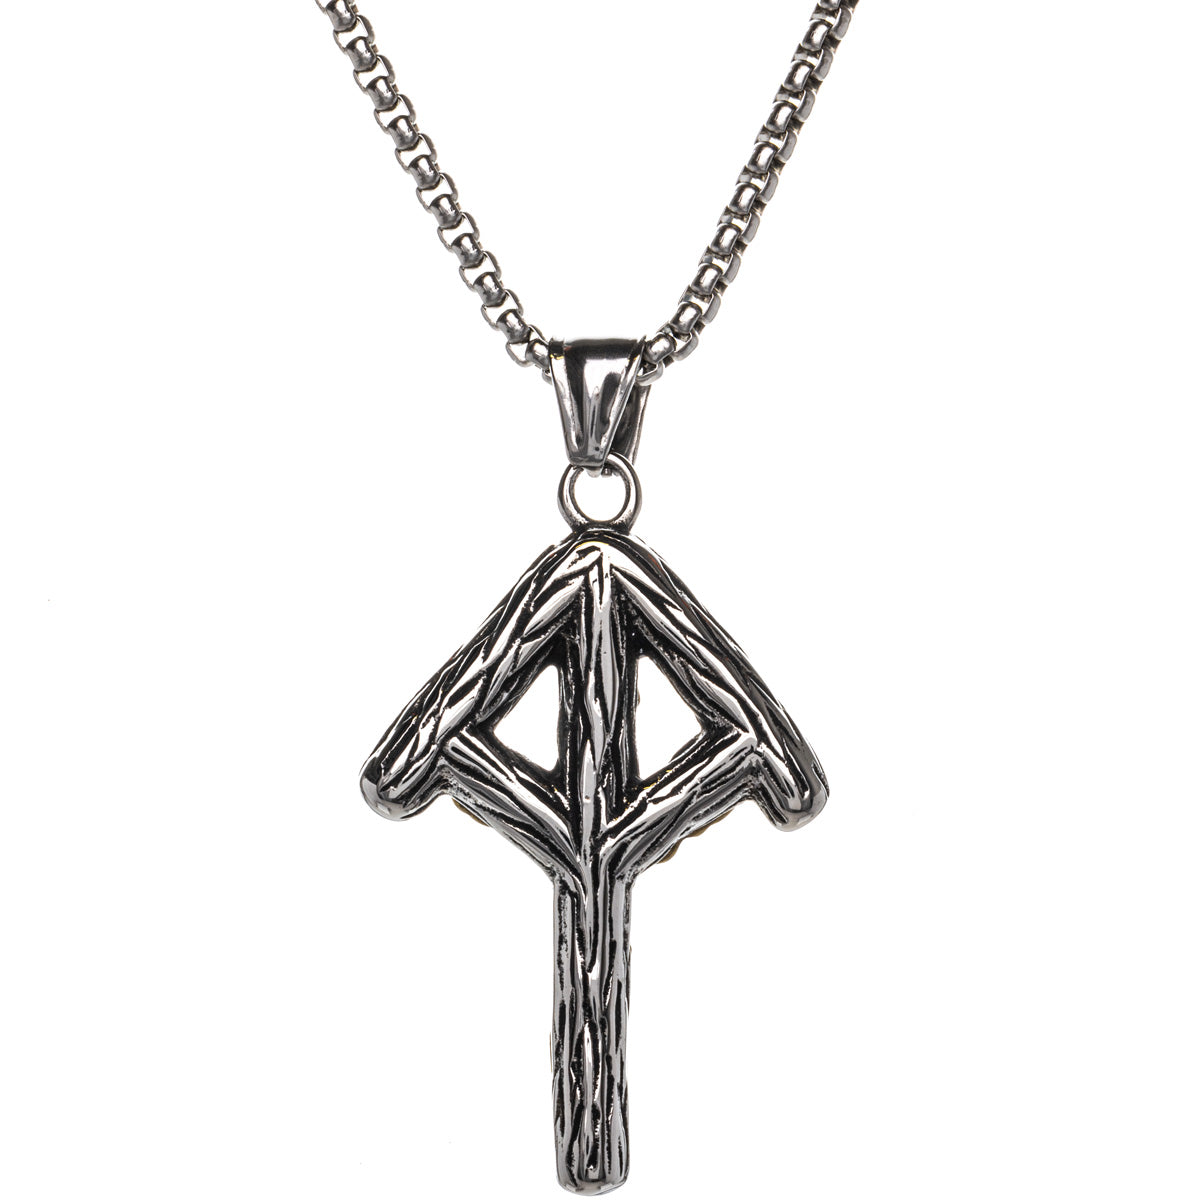 Algiz pendant tree of life pendant necklace (Steel 316L)